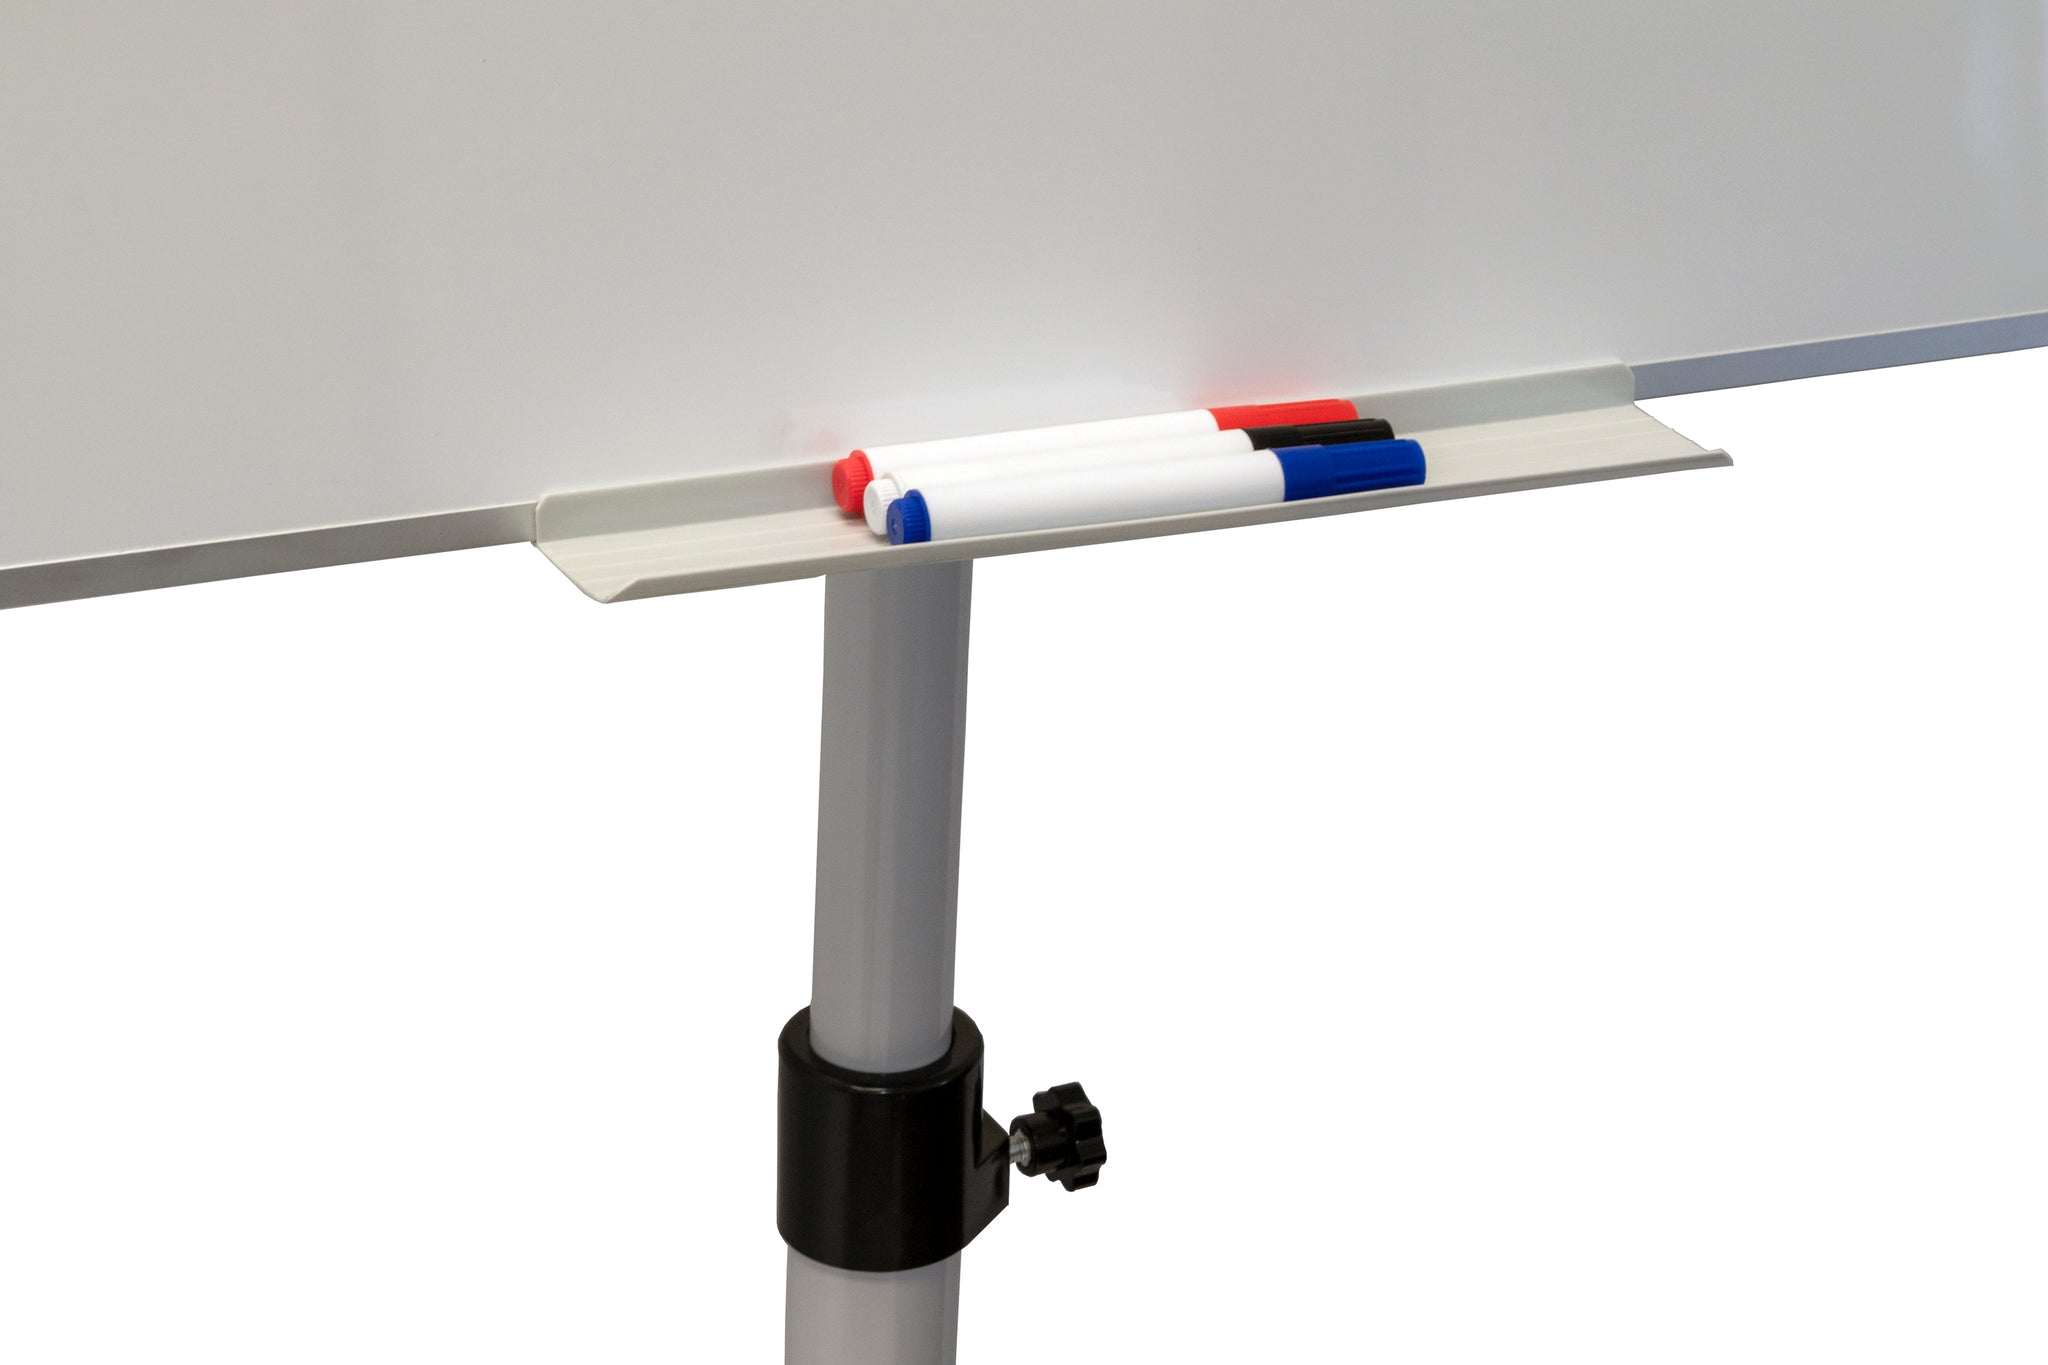 Magnetic Mobile Flipchart Whiteboard On Wheels 40x28